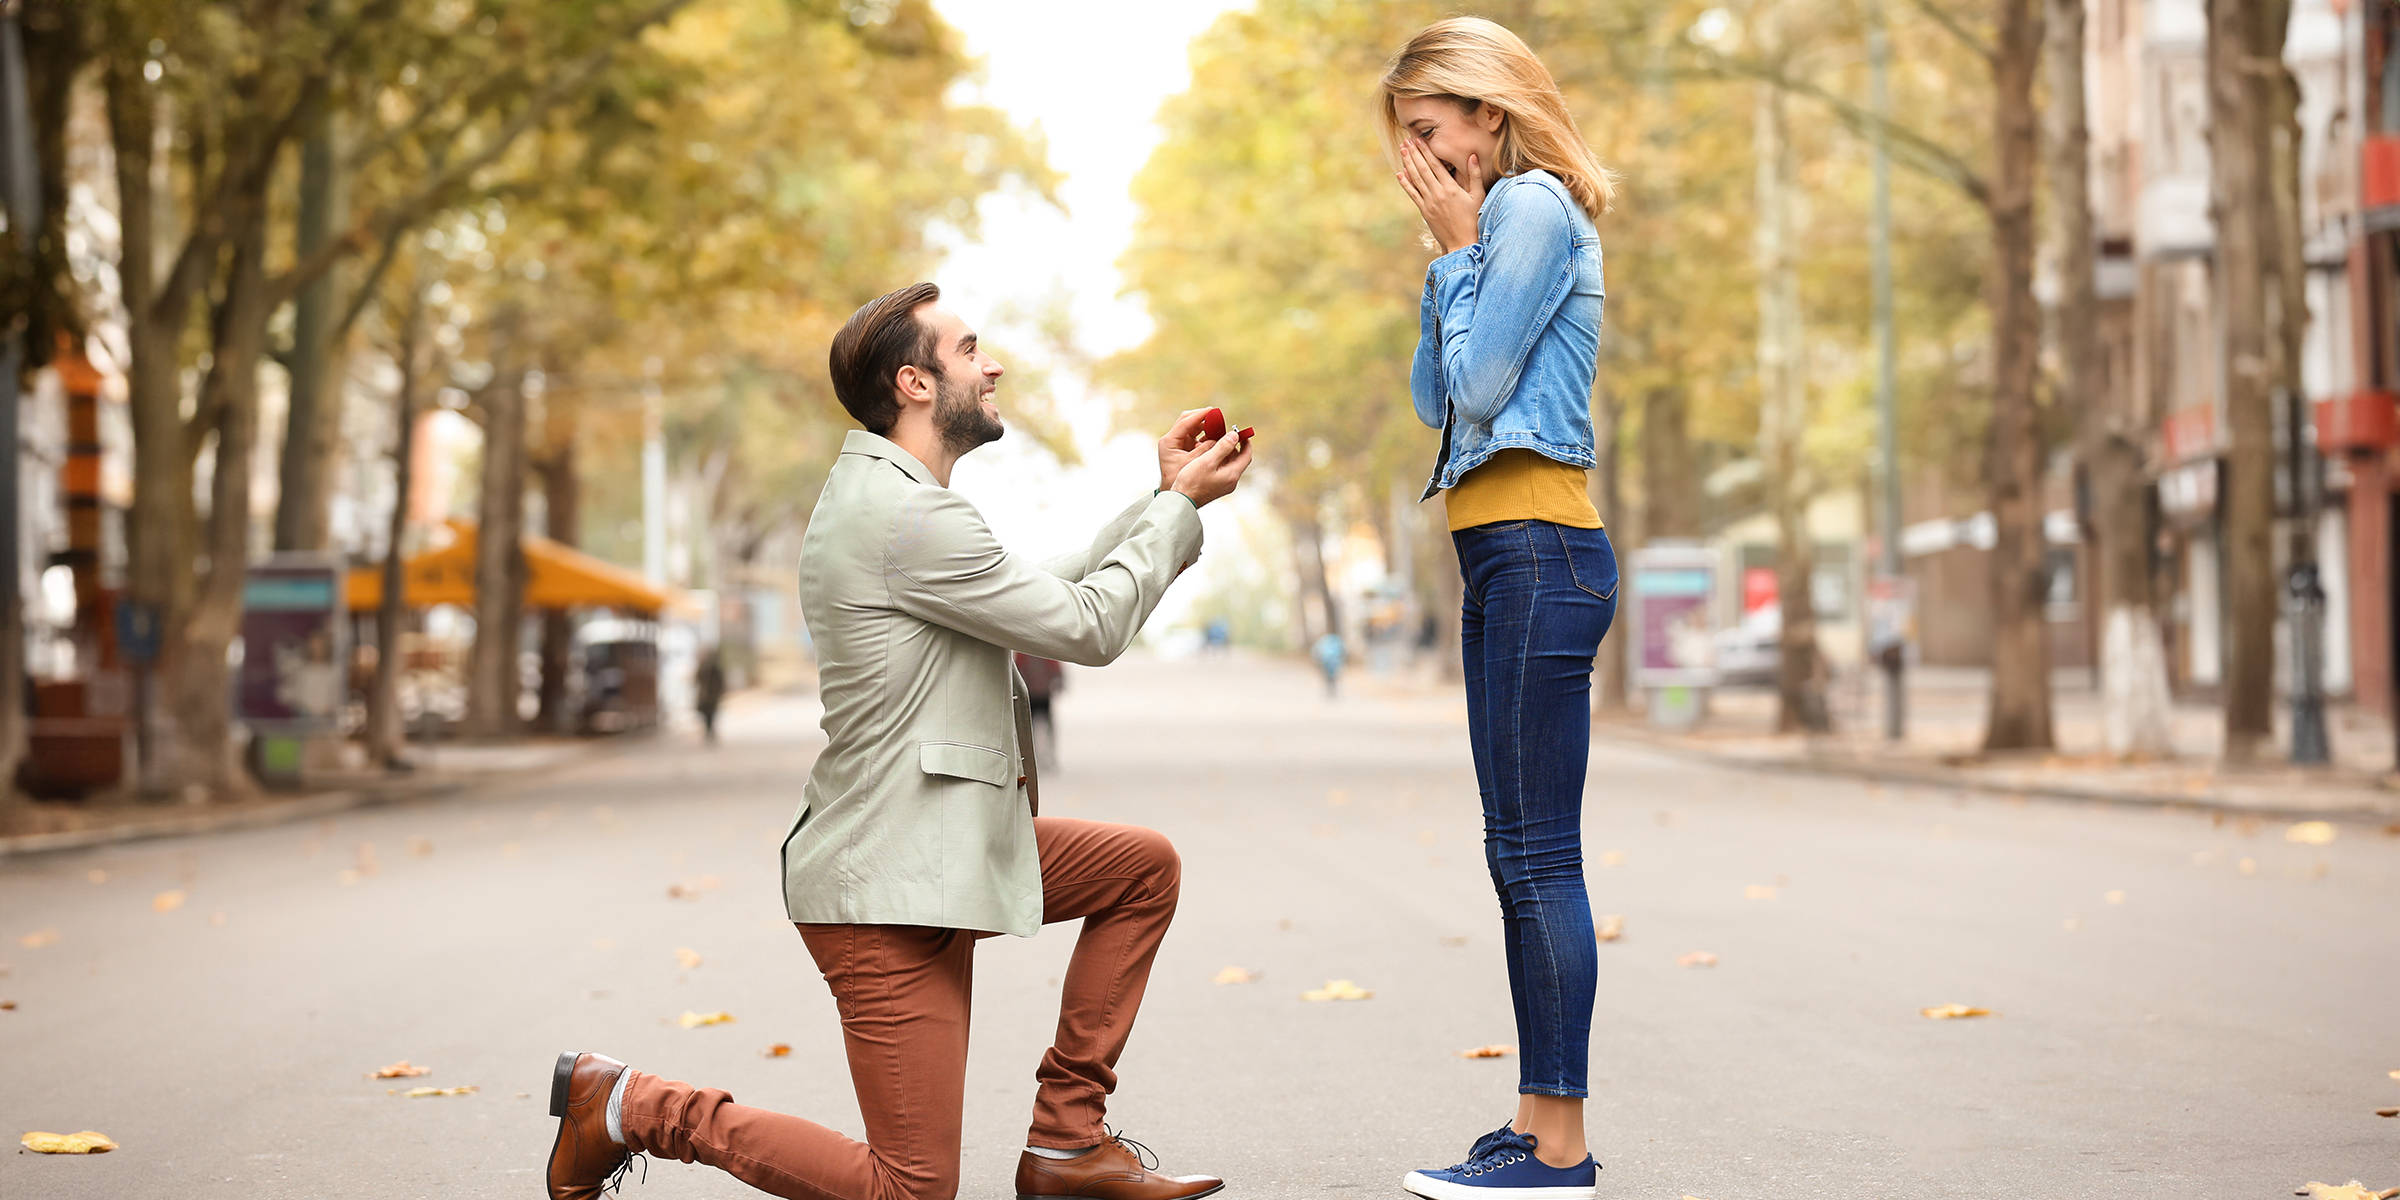 A man proposing to a woman | Source: Shutterstock